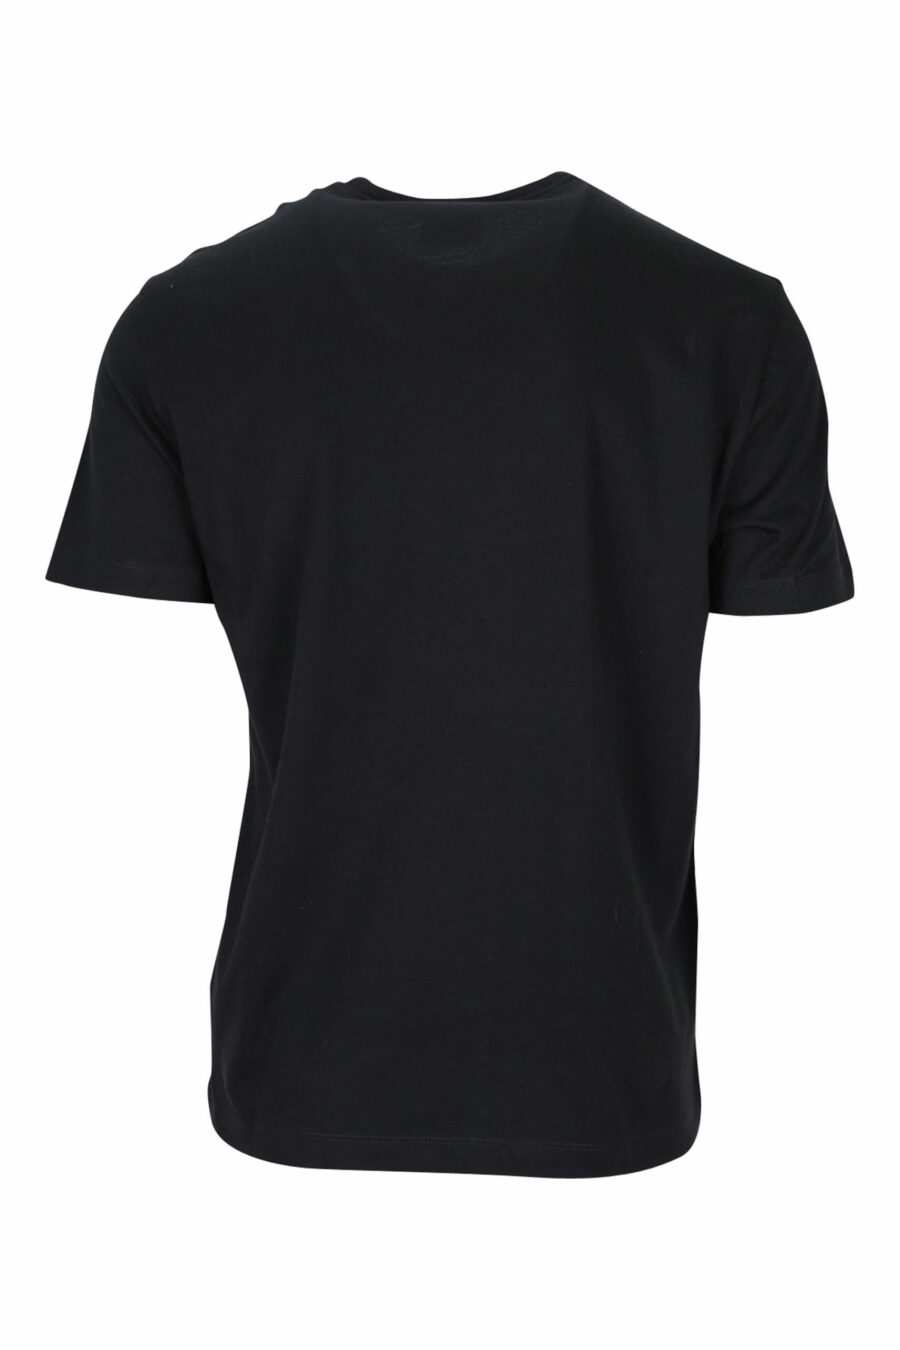 T-shirt noir avec blanc "lux identity" maxilogo - 8057767688400 1 scaled